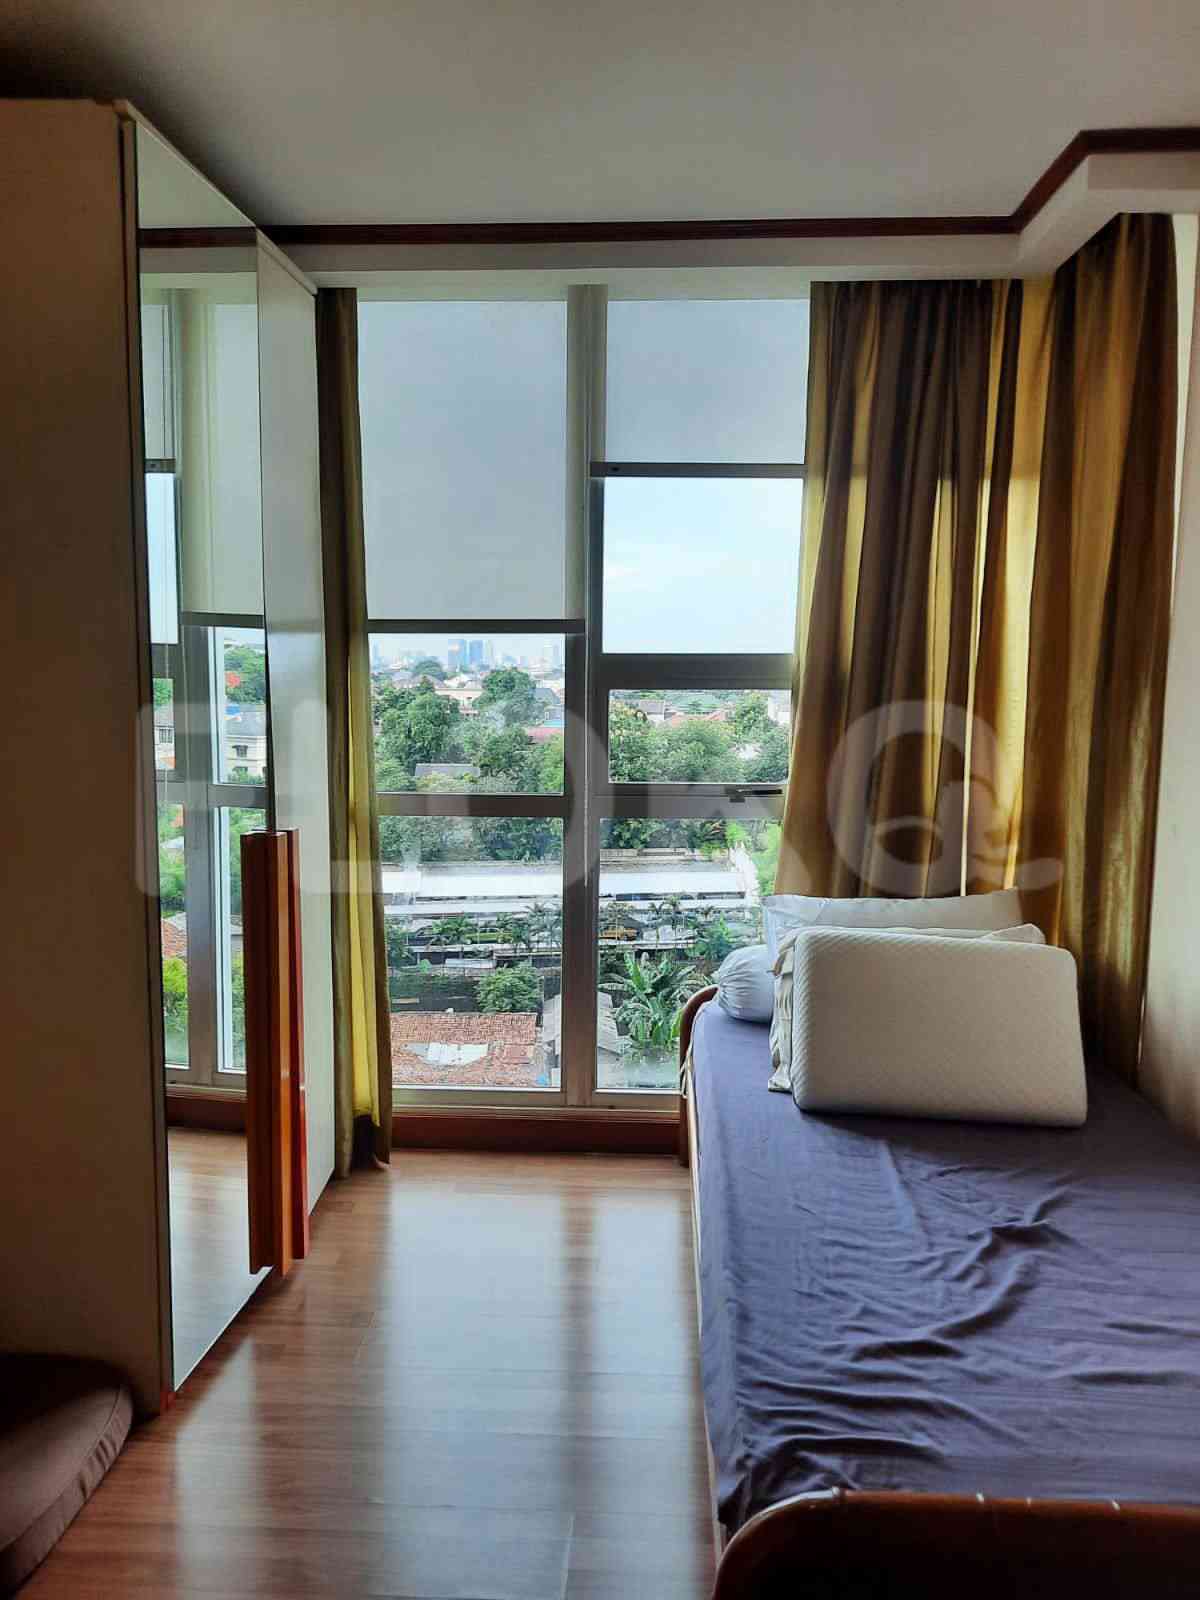 2 Bedroom on 17th Floor for Rent in Kemang Village Residence - fke9f0 2